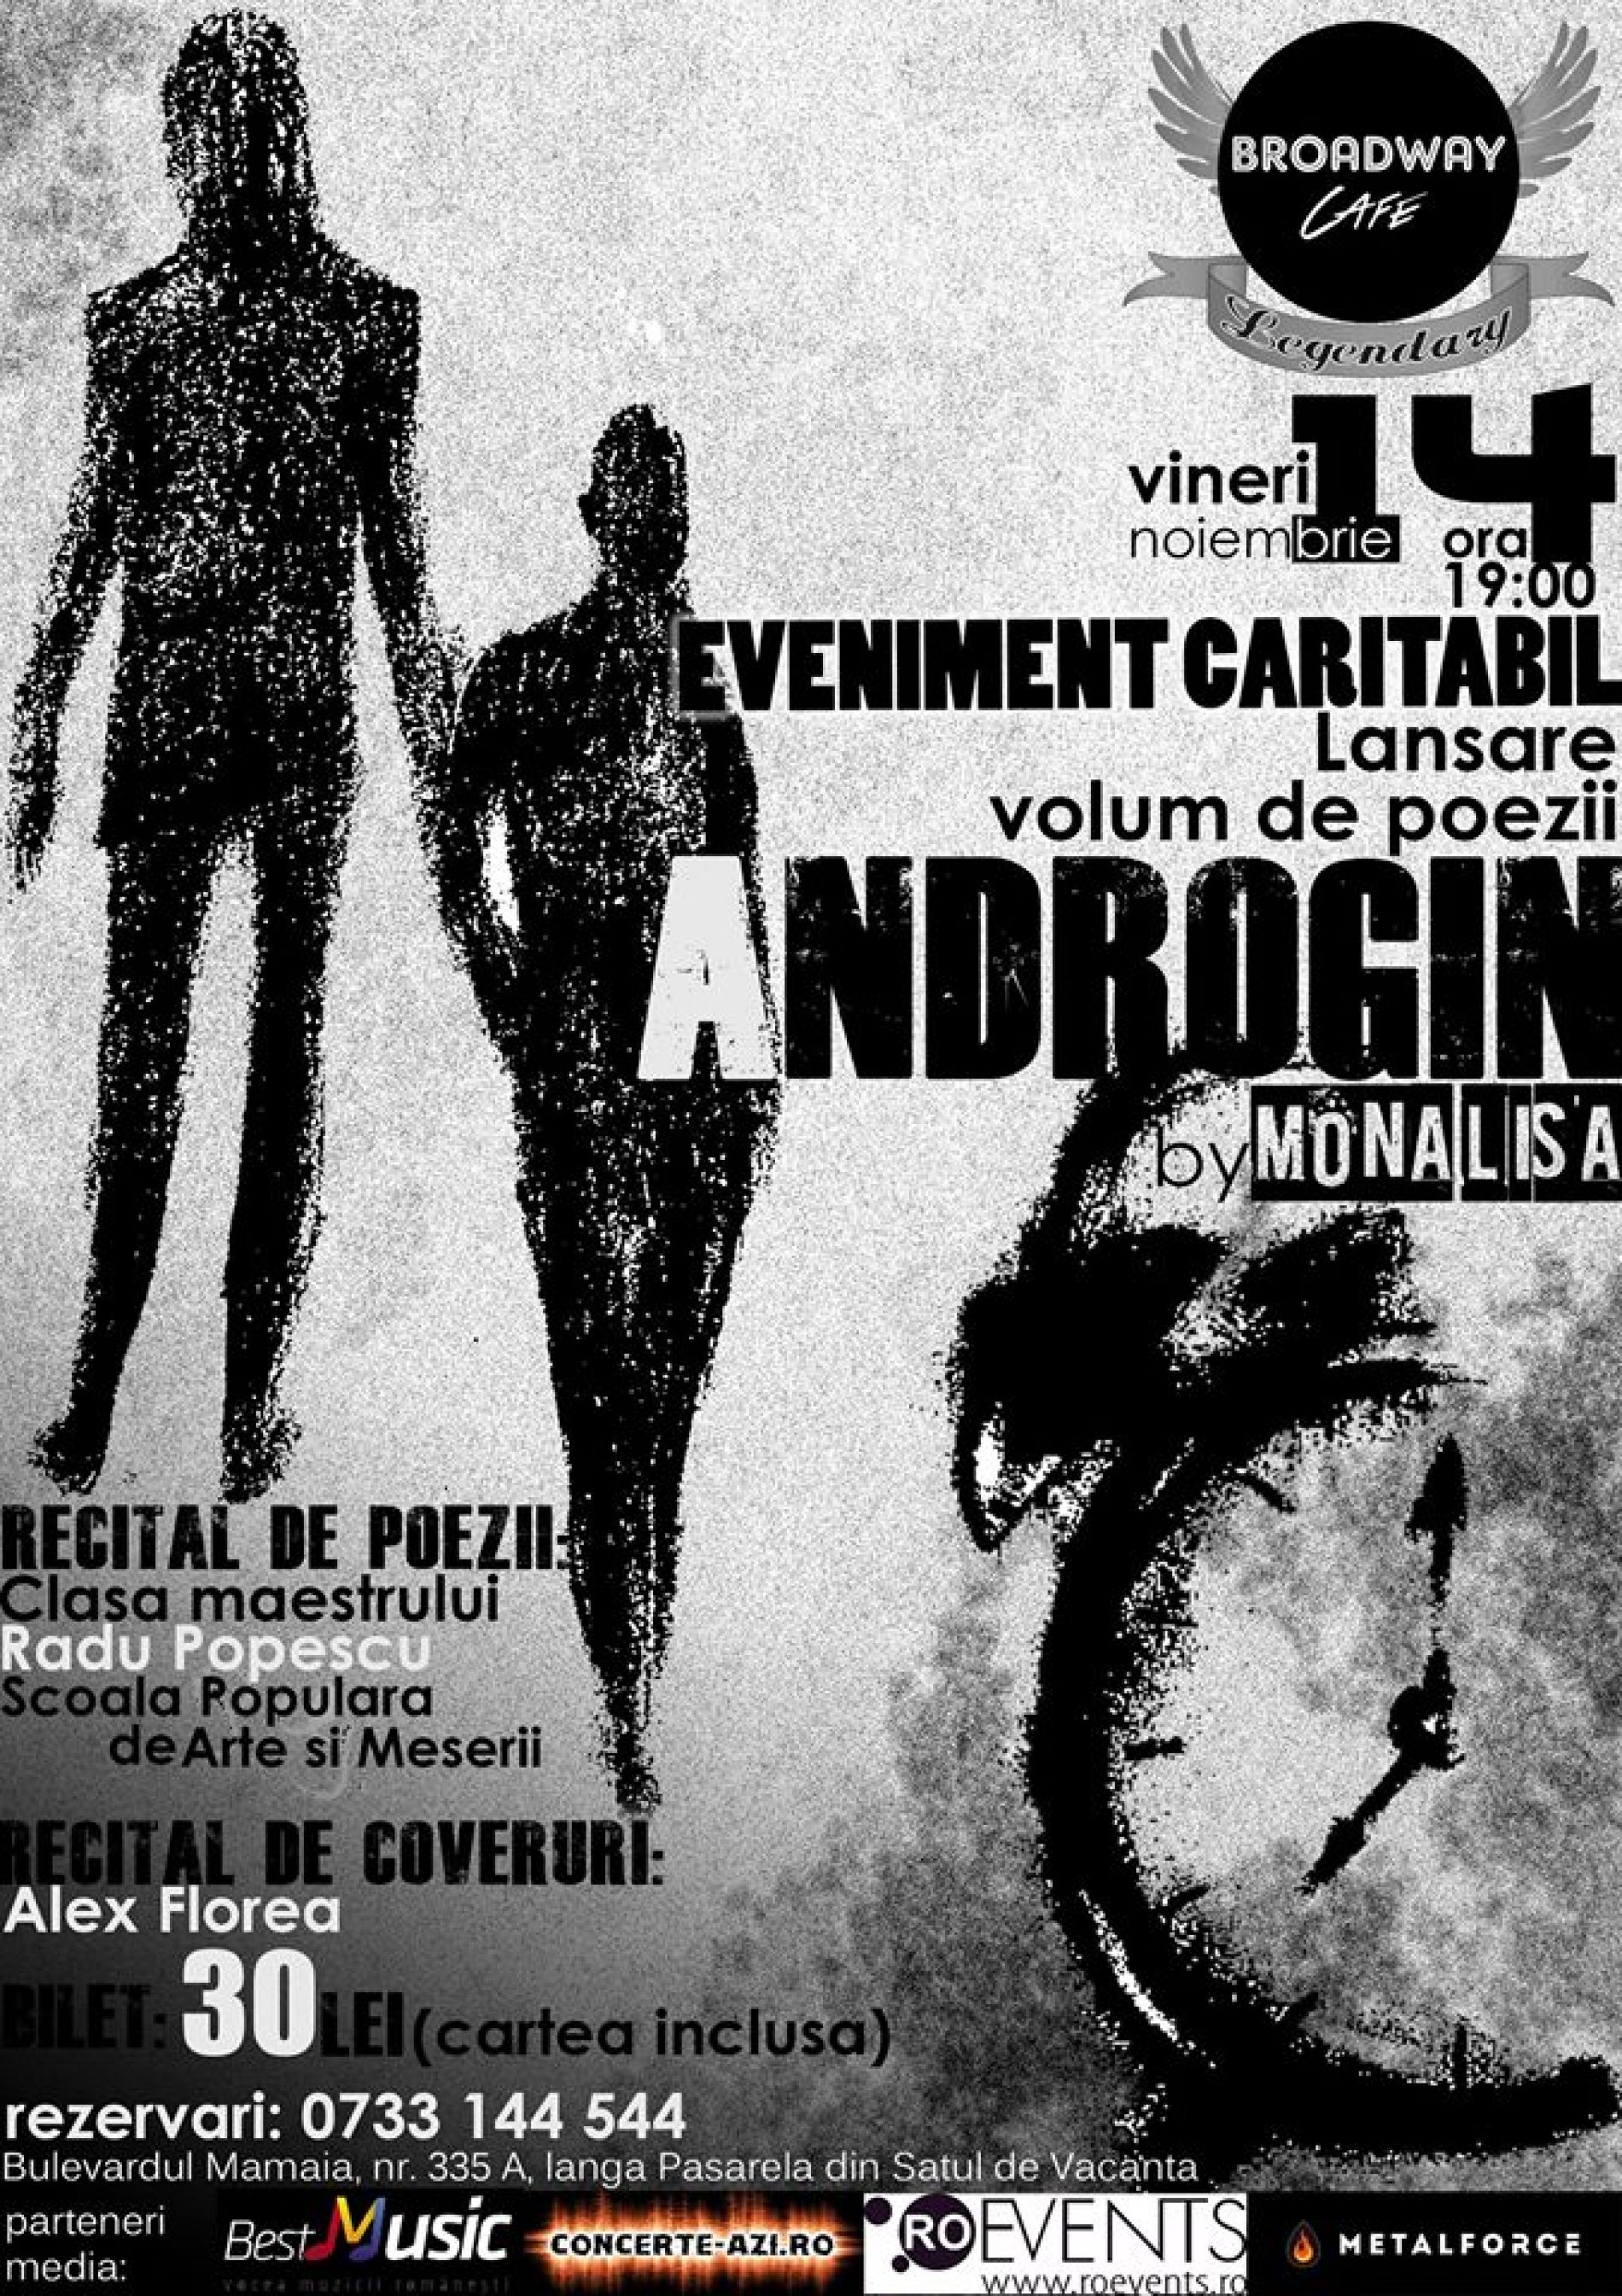 Eveniment caritabil: lansare volum poezii Androgin by Mona Lisa in Constanta